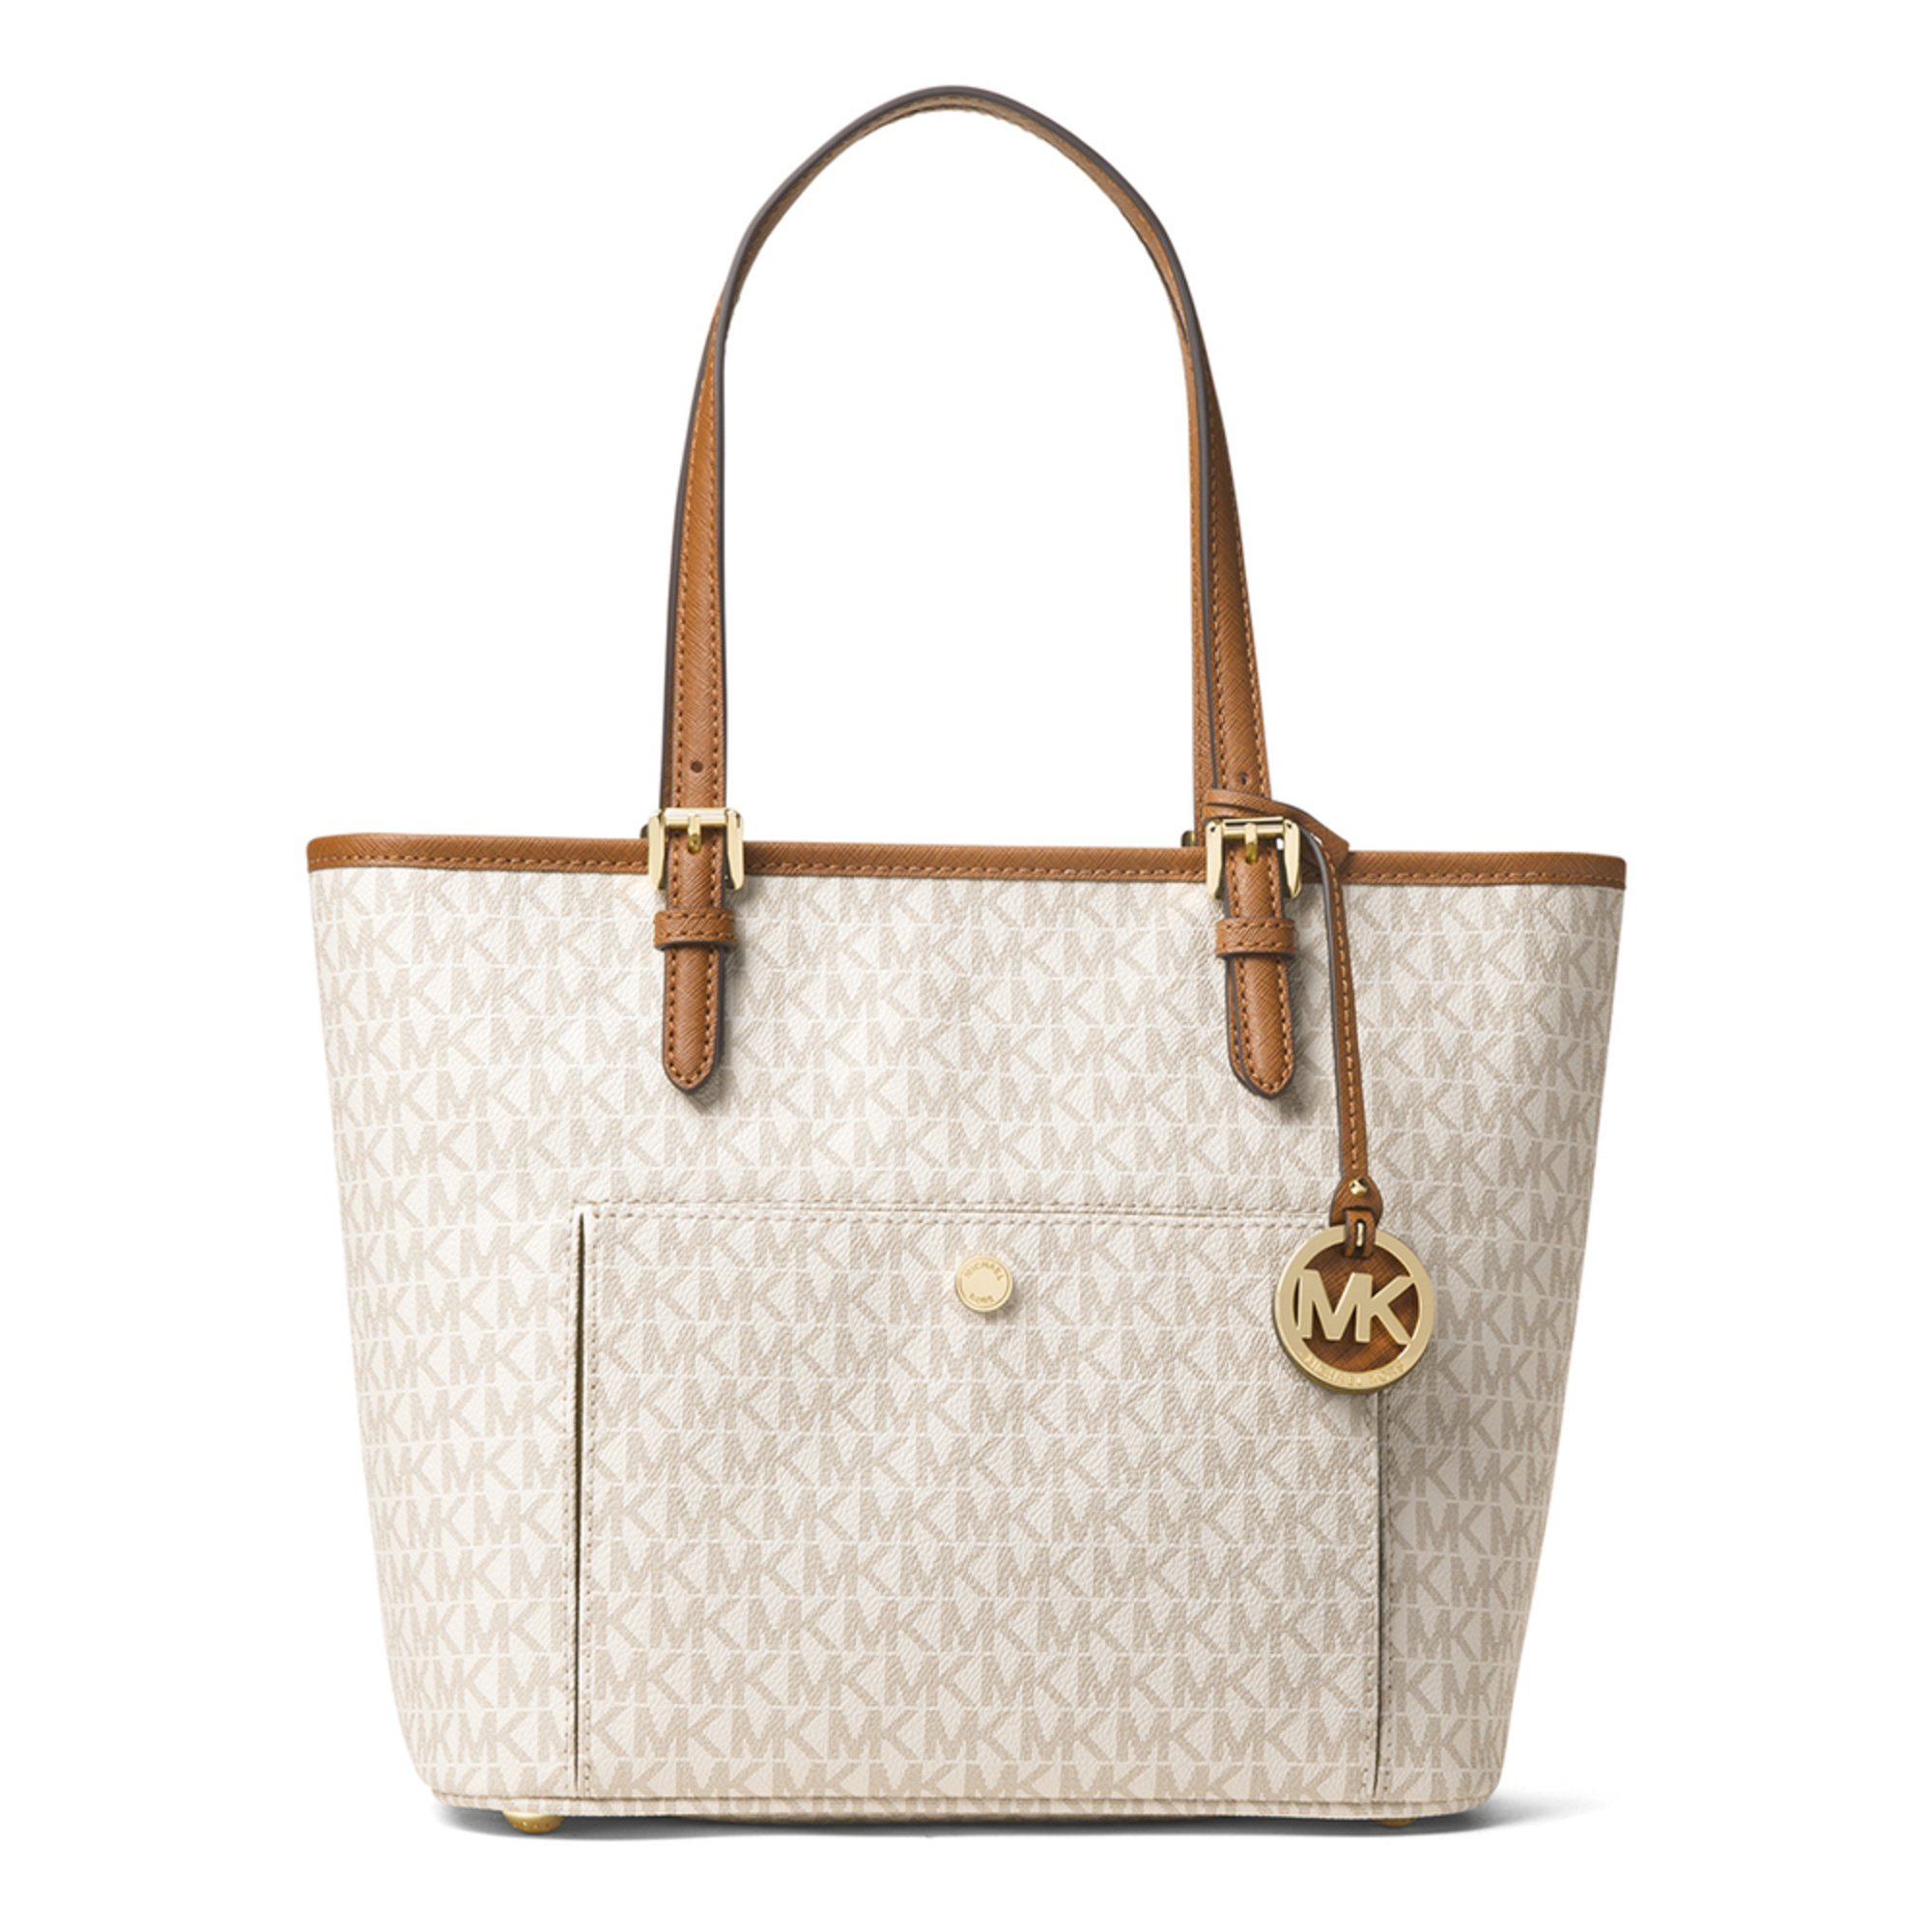 Roberta Di Camerino Handbags: Michael Kors View All Handbags